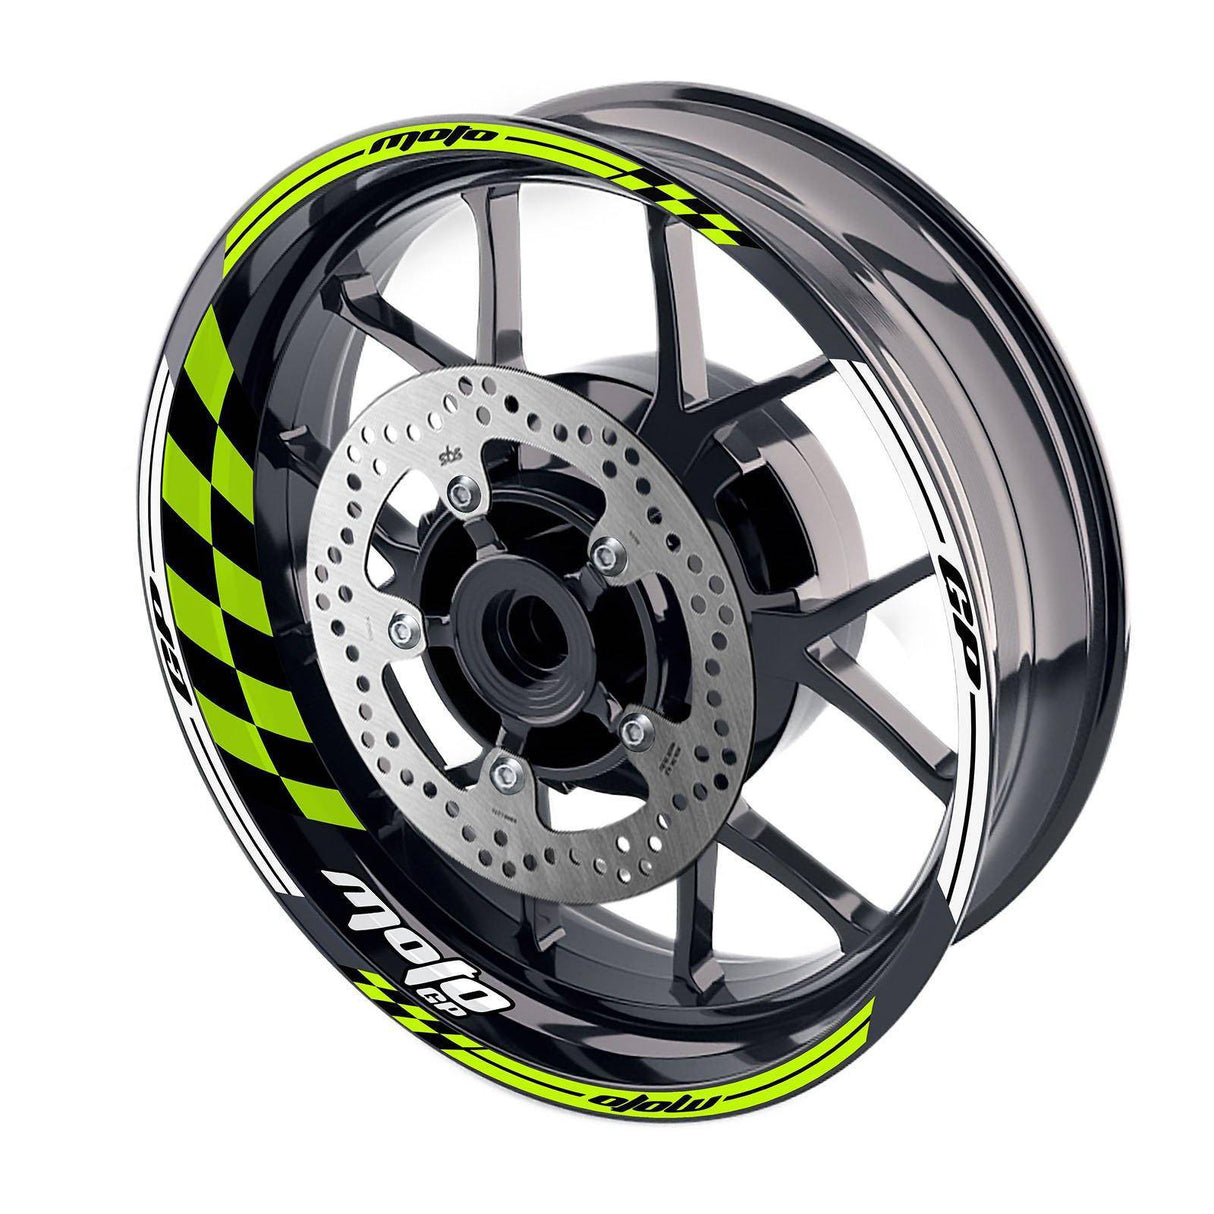 For Yamaha XSR 900 Logo MOTO 17 inch Rim Wheel Stickers GP01 Racing Check.